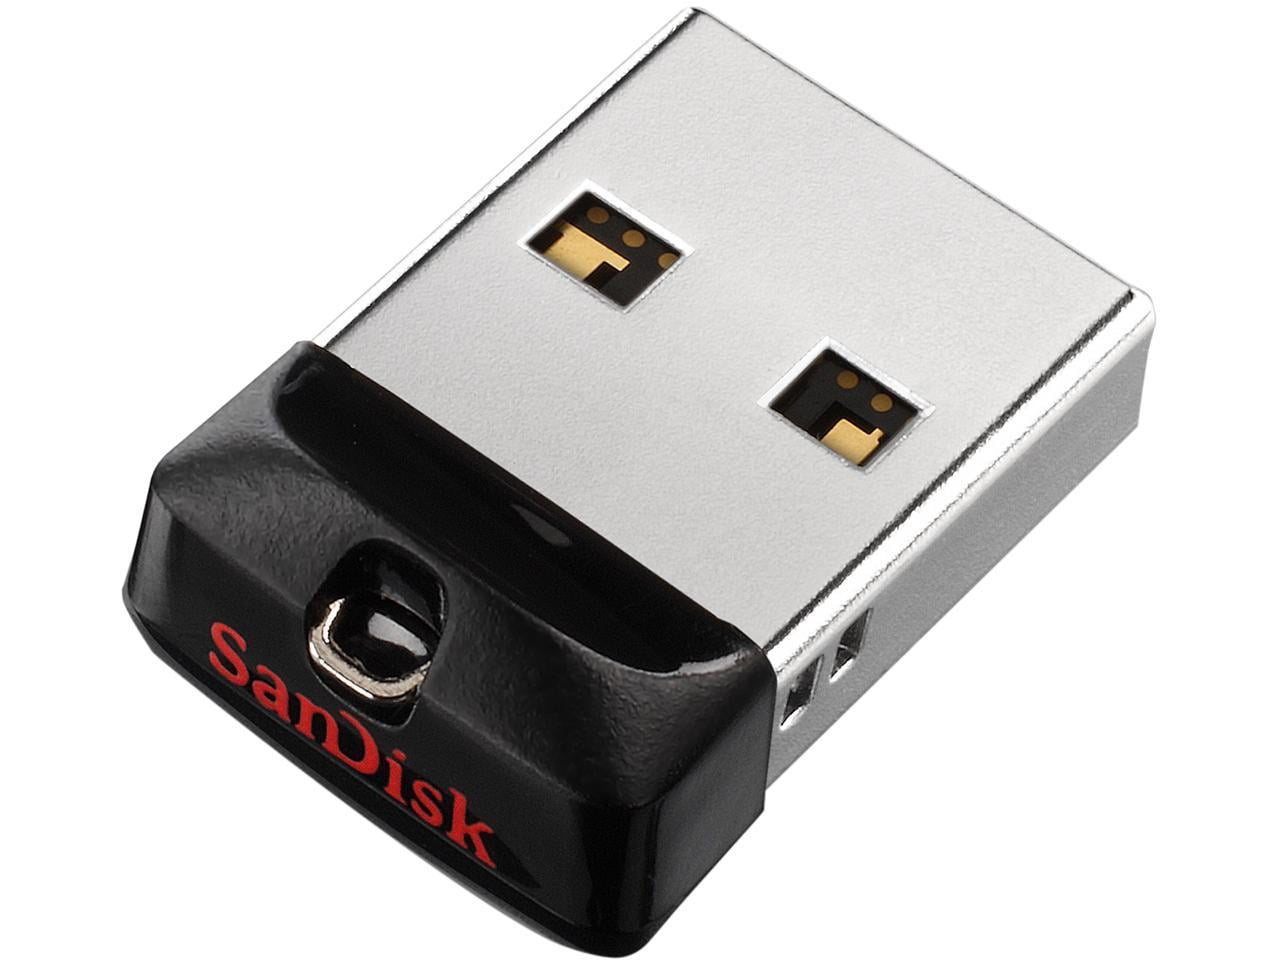 SanDisk 64GB Cruzer Glide USB 2.0 Flash Drive 2 Pack - SDCZ60-064G